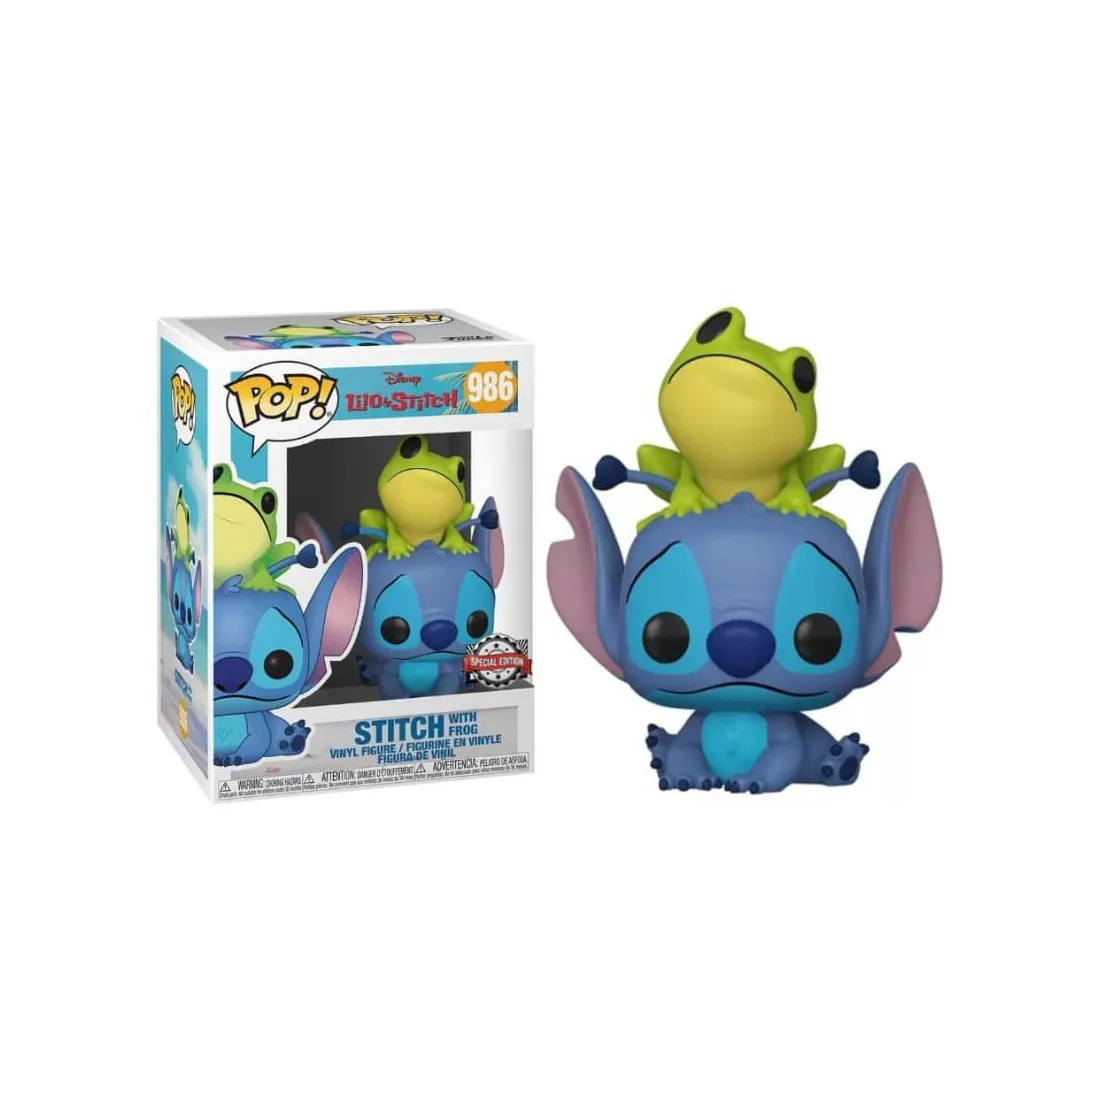 Stitch with Frog Special Edition 986 Figure, Disney Lilo & Stitch Figure